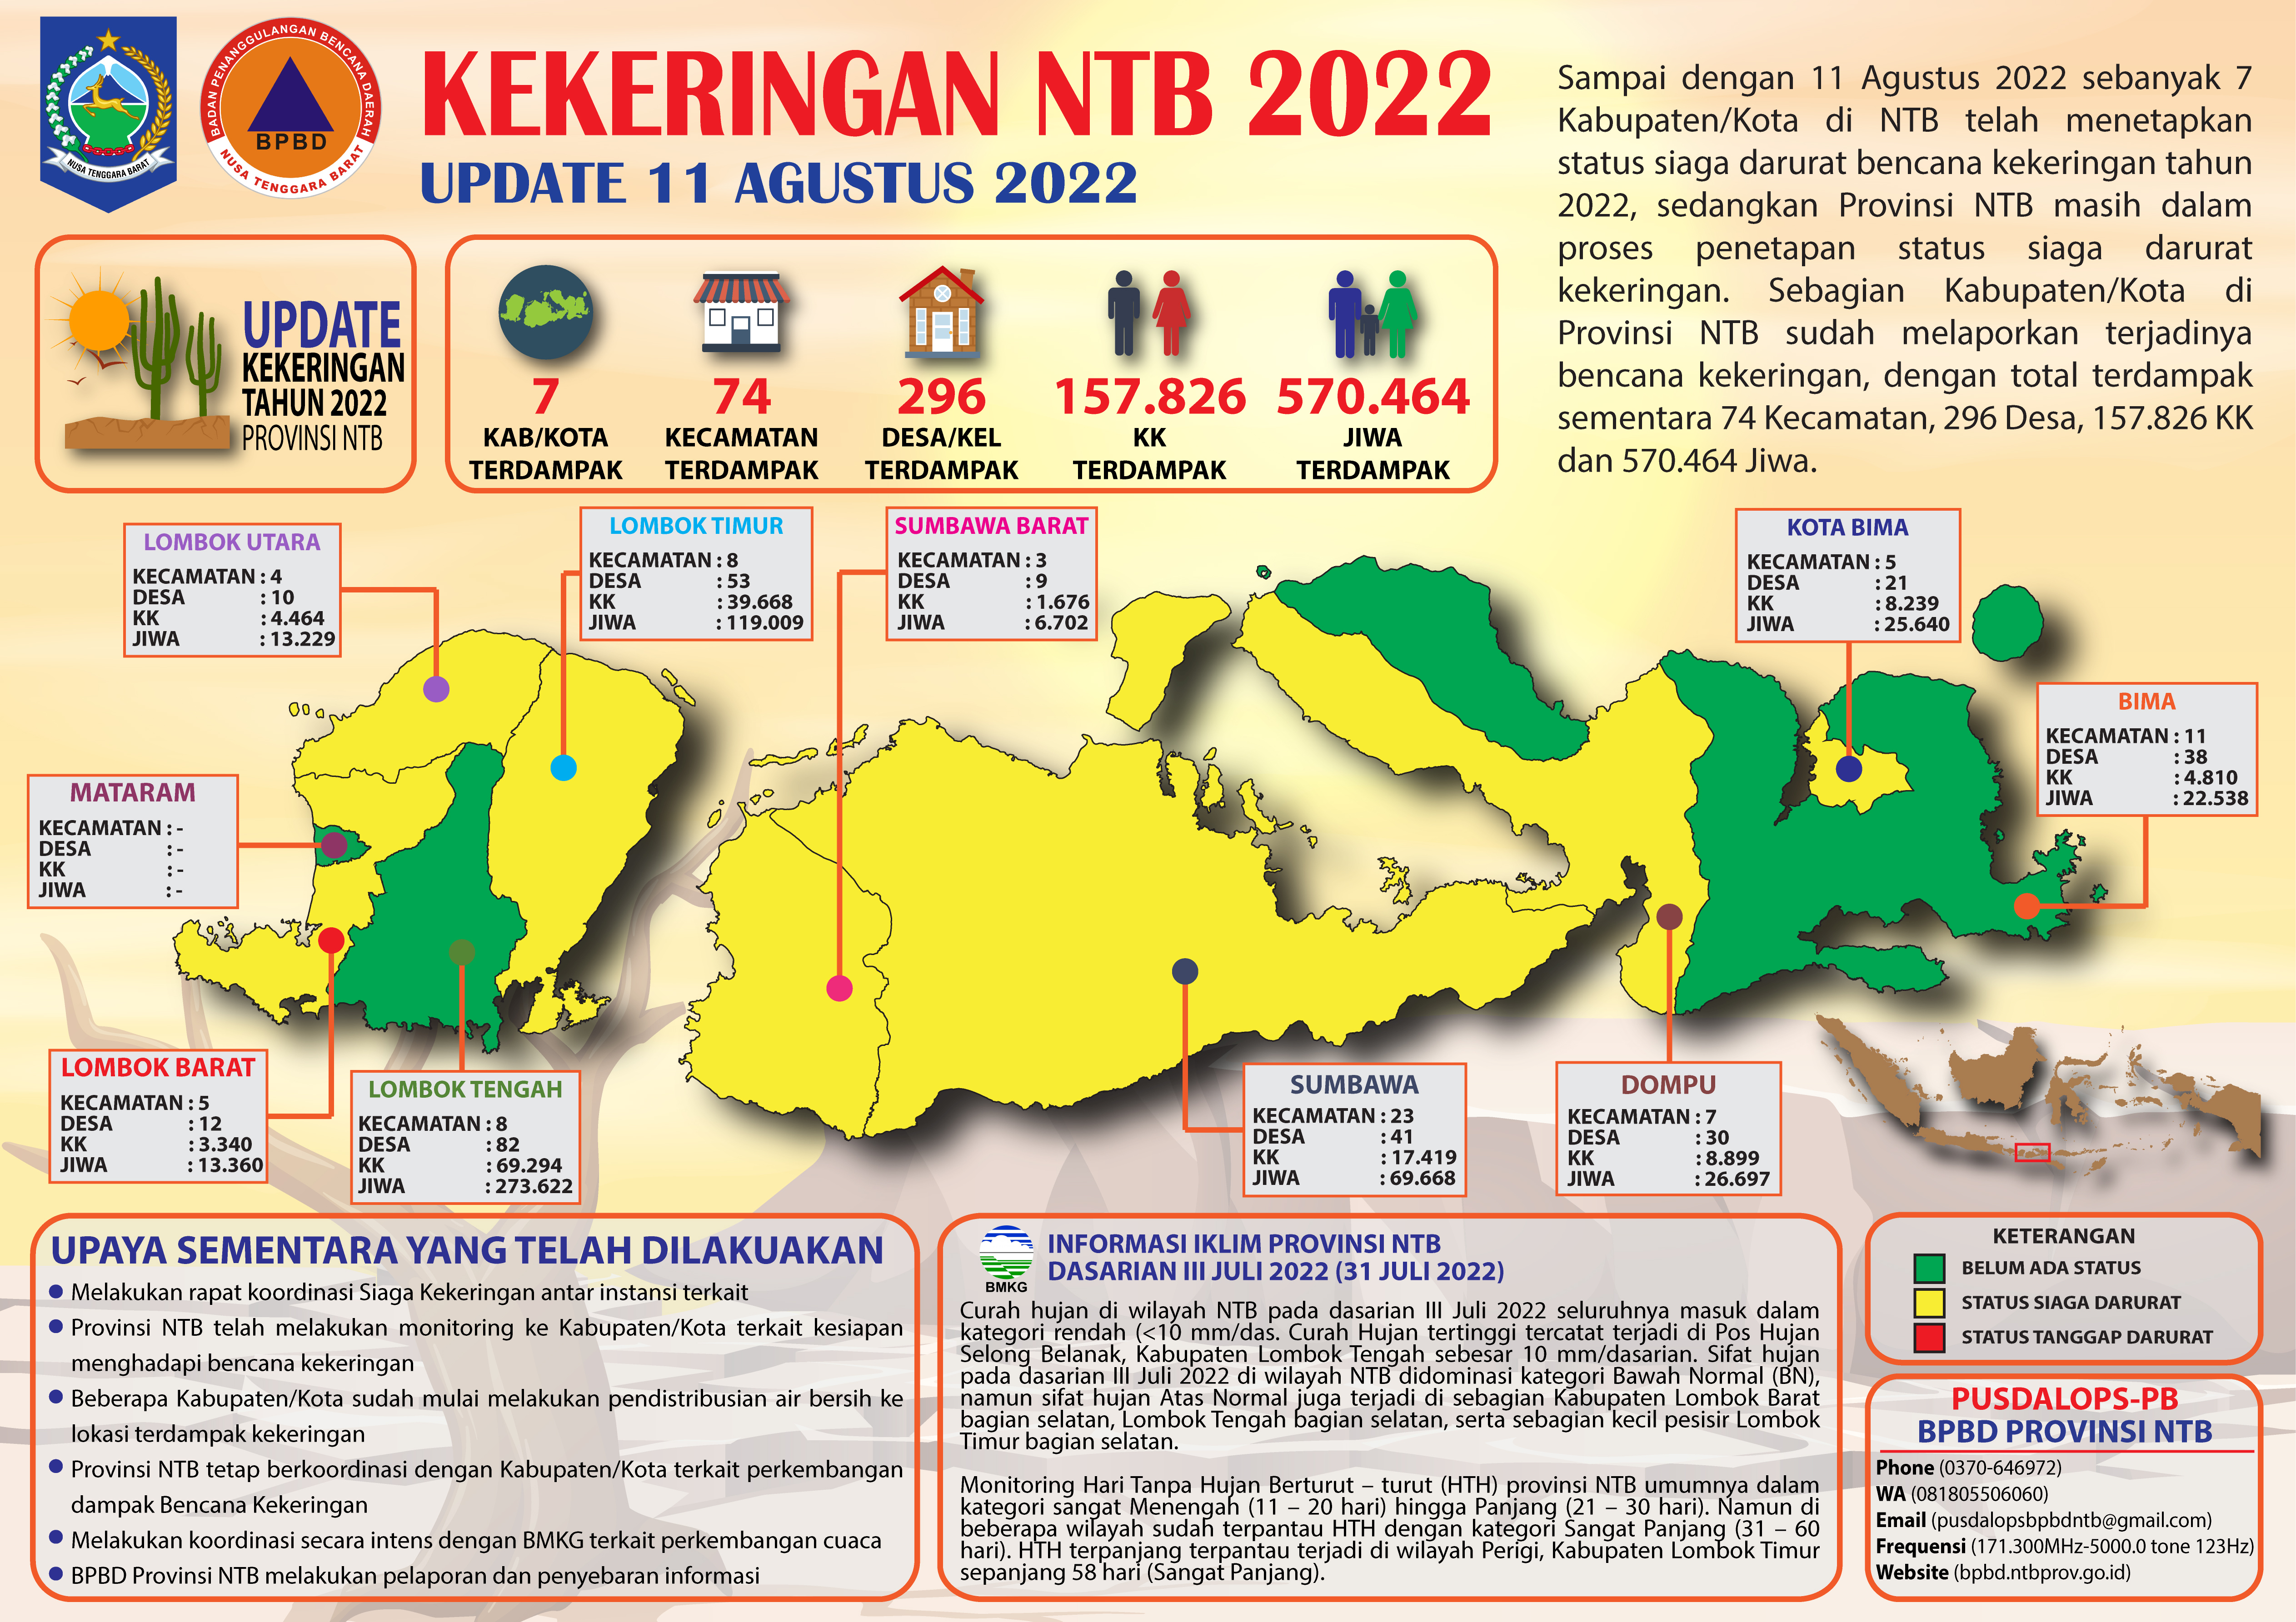 UPDATE PERKEMBANGAN BENCANA KEKERINGAN NTB ( UPDATE 11 AGUSTUS 2022)